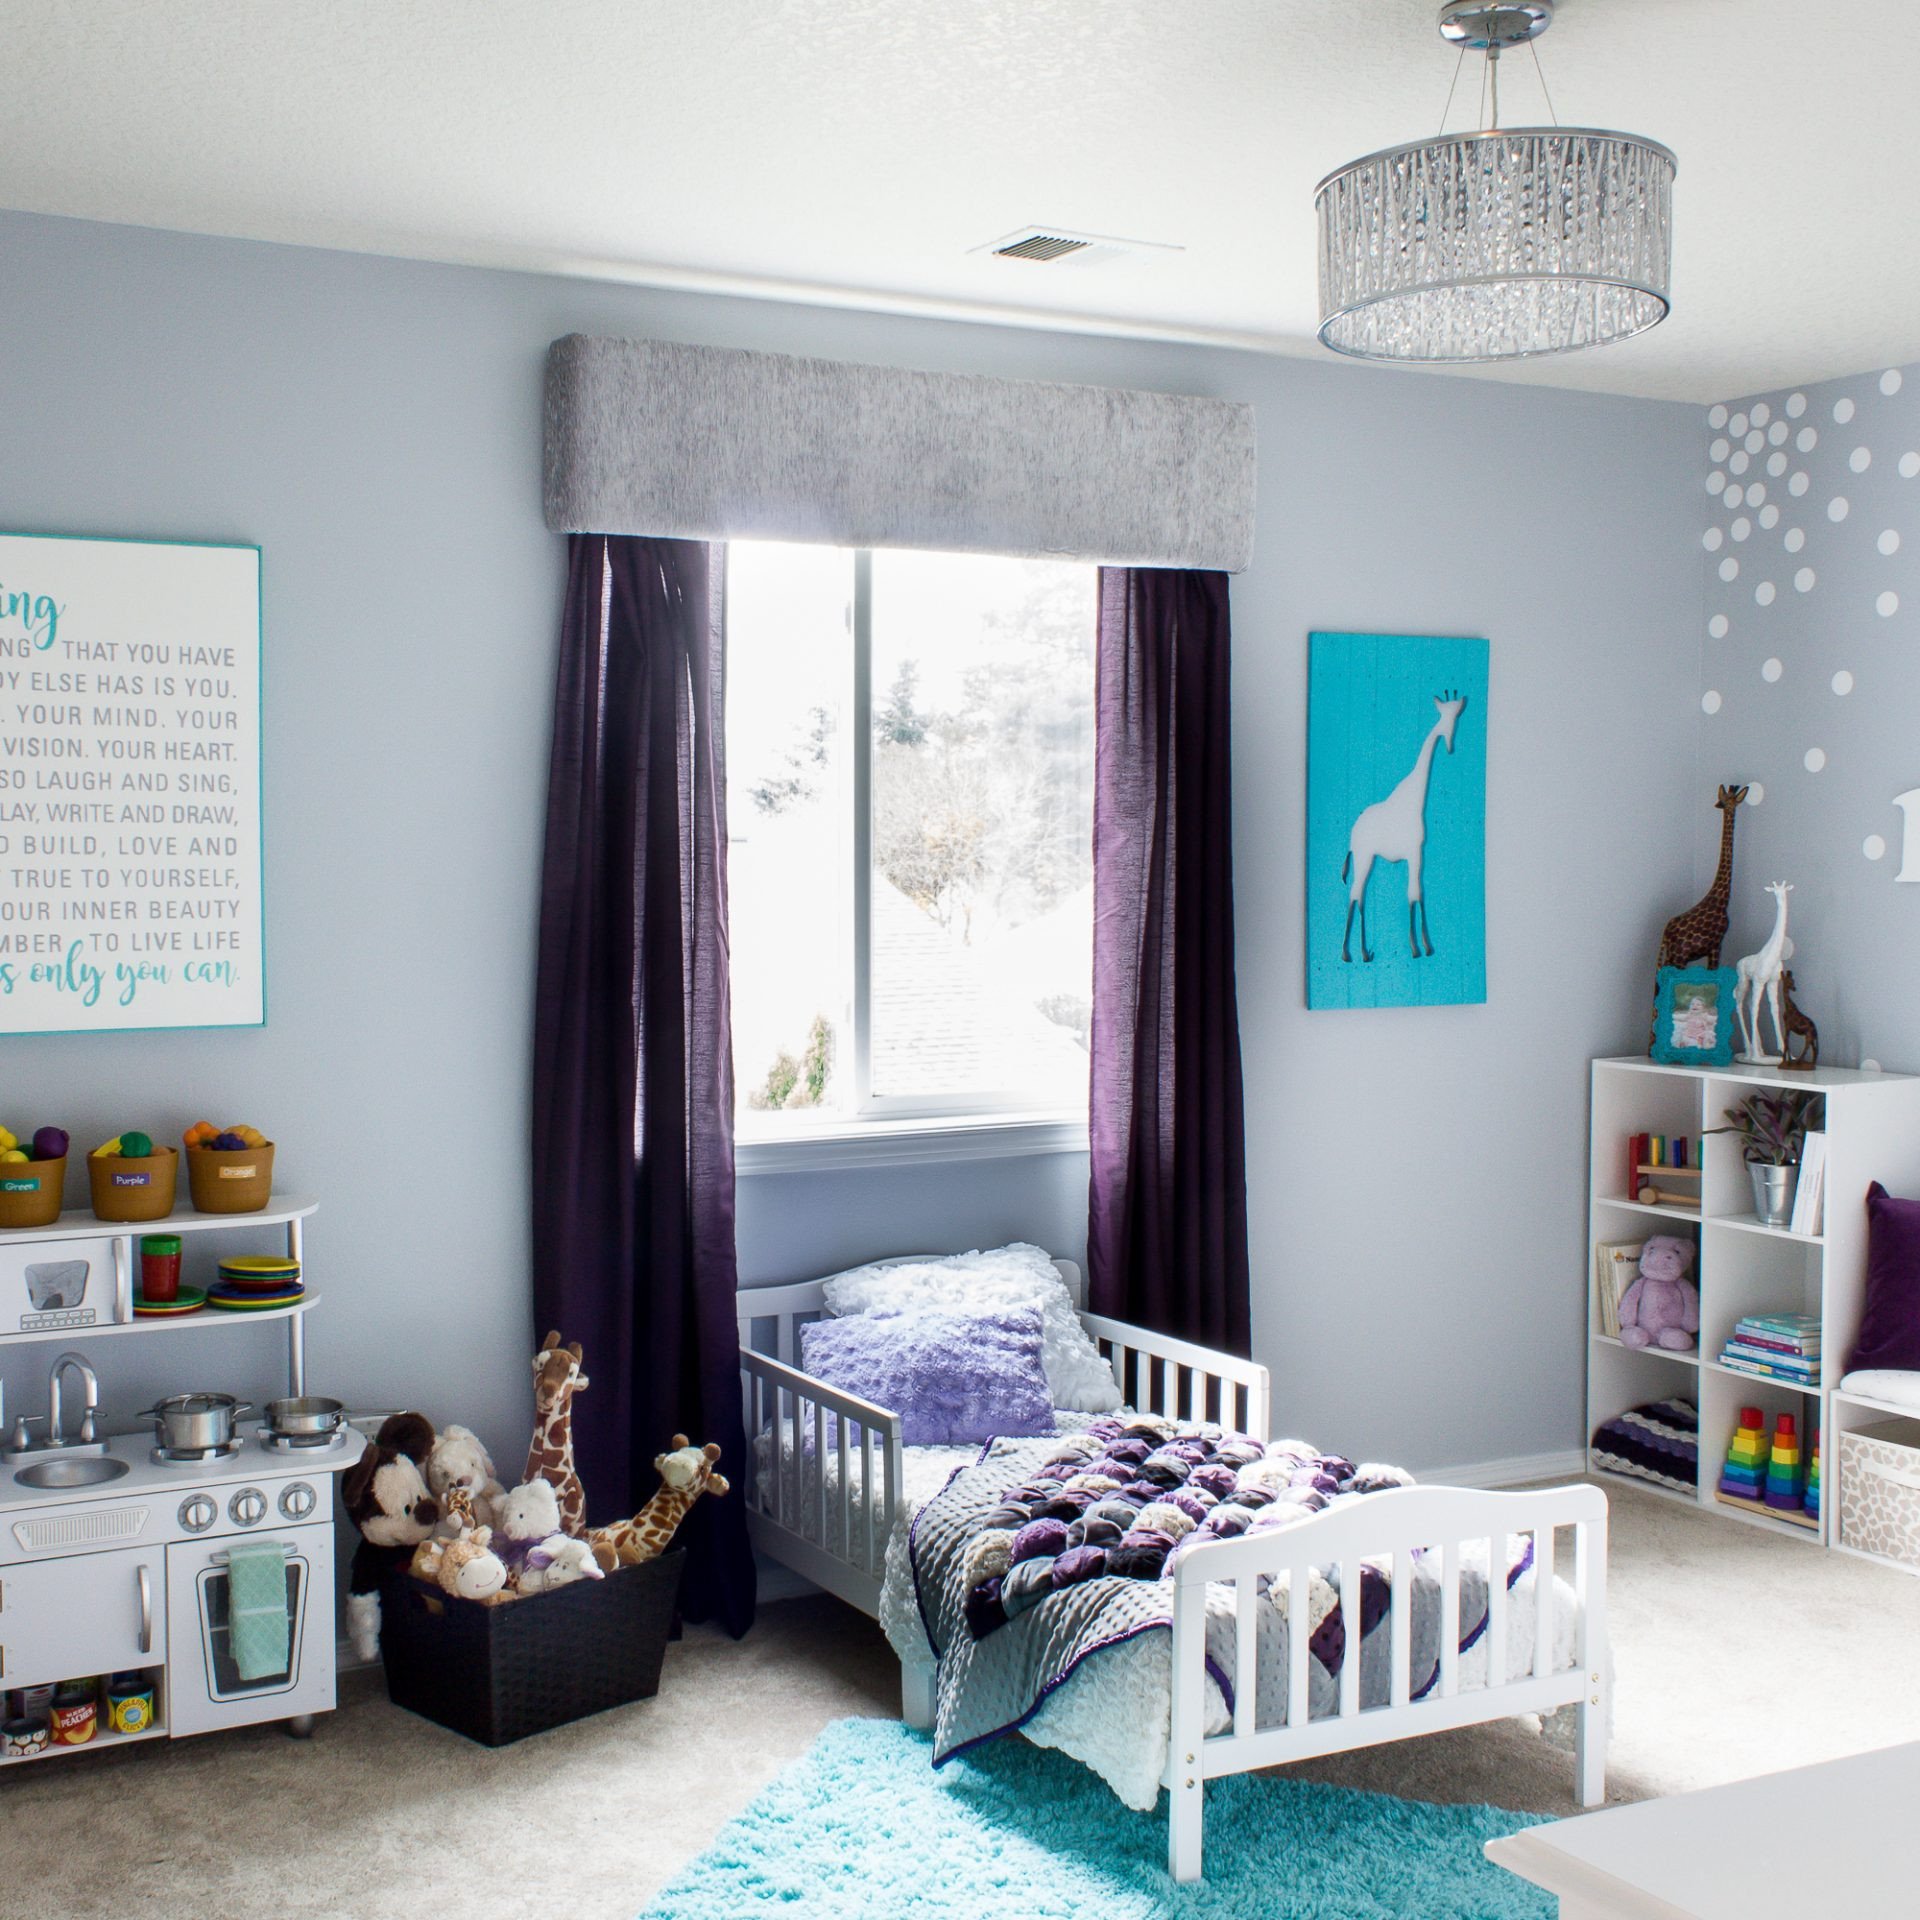 DIY Toddler Girl Room Decor
 Cute Toddler Girl Room Ideas with may DIY decor tutorials